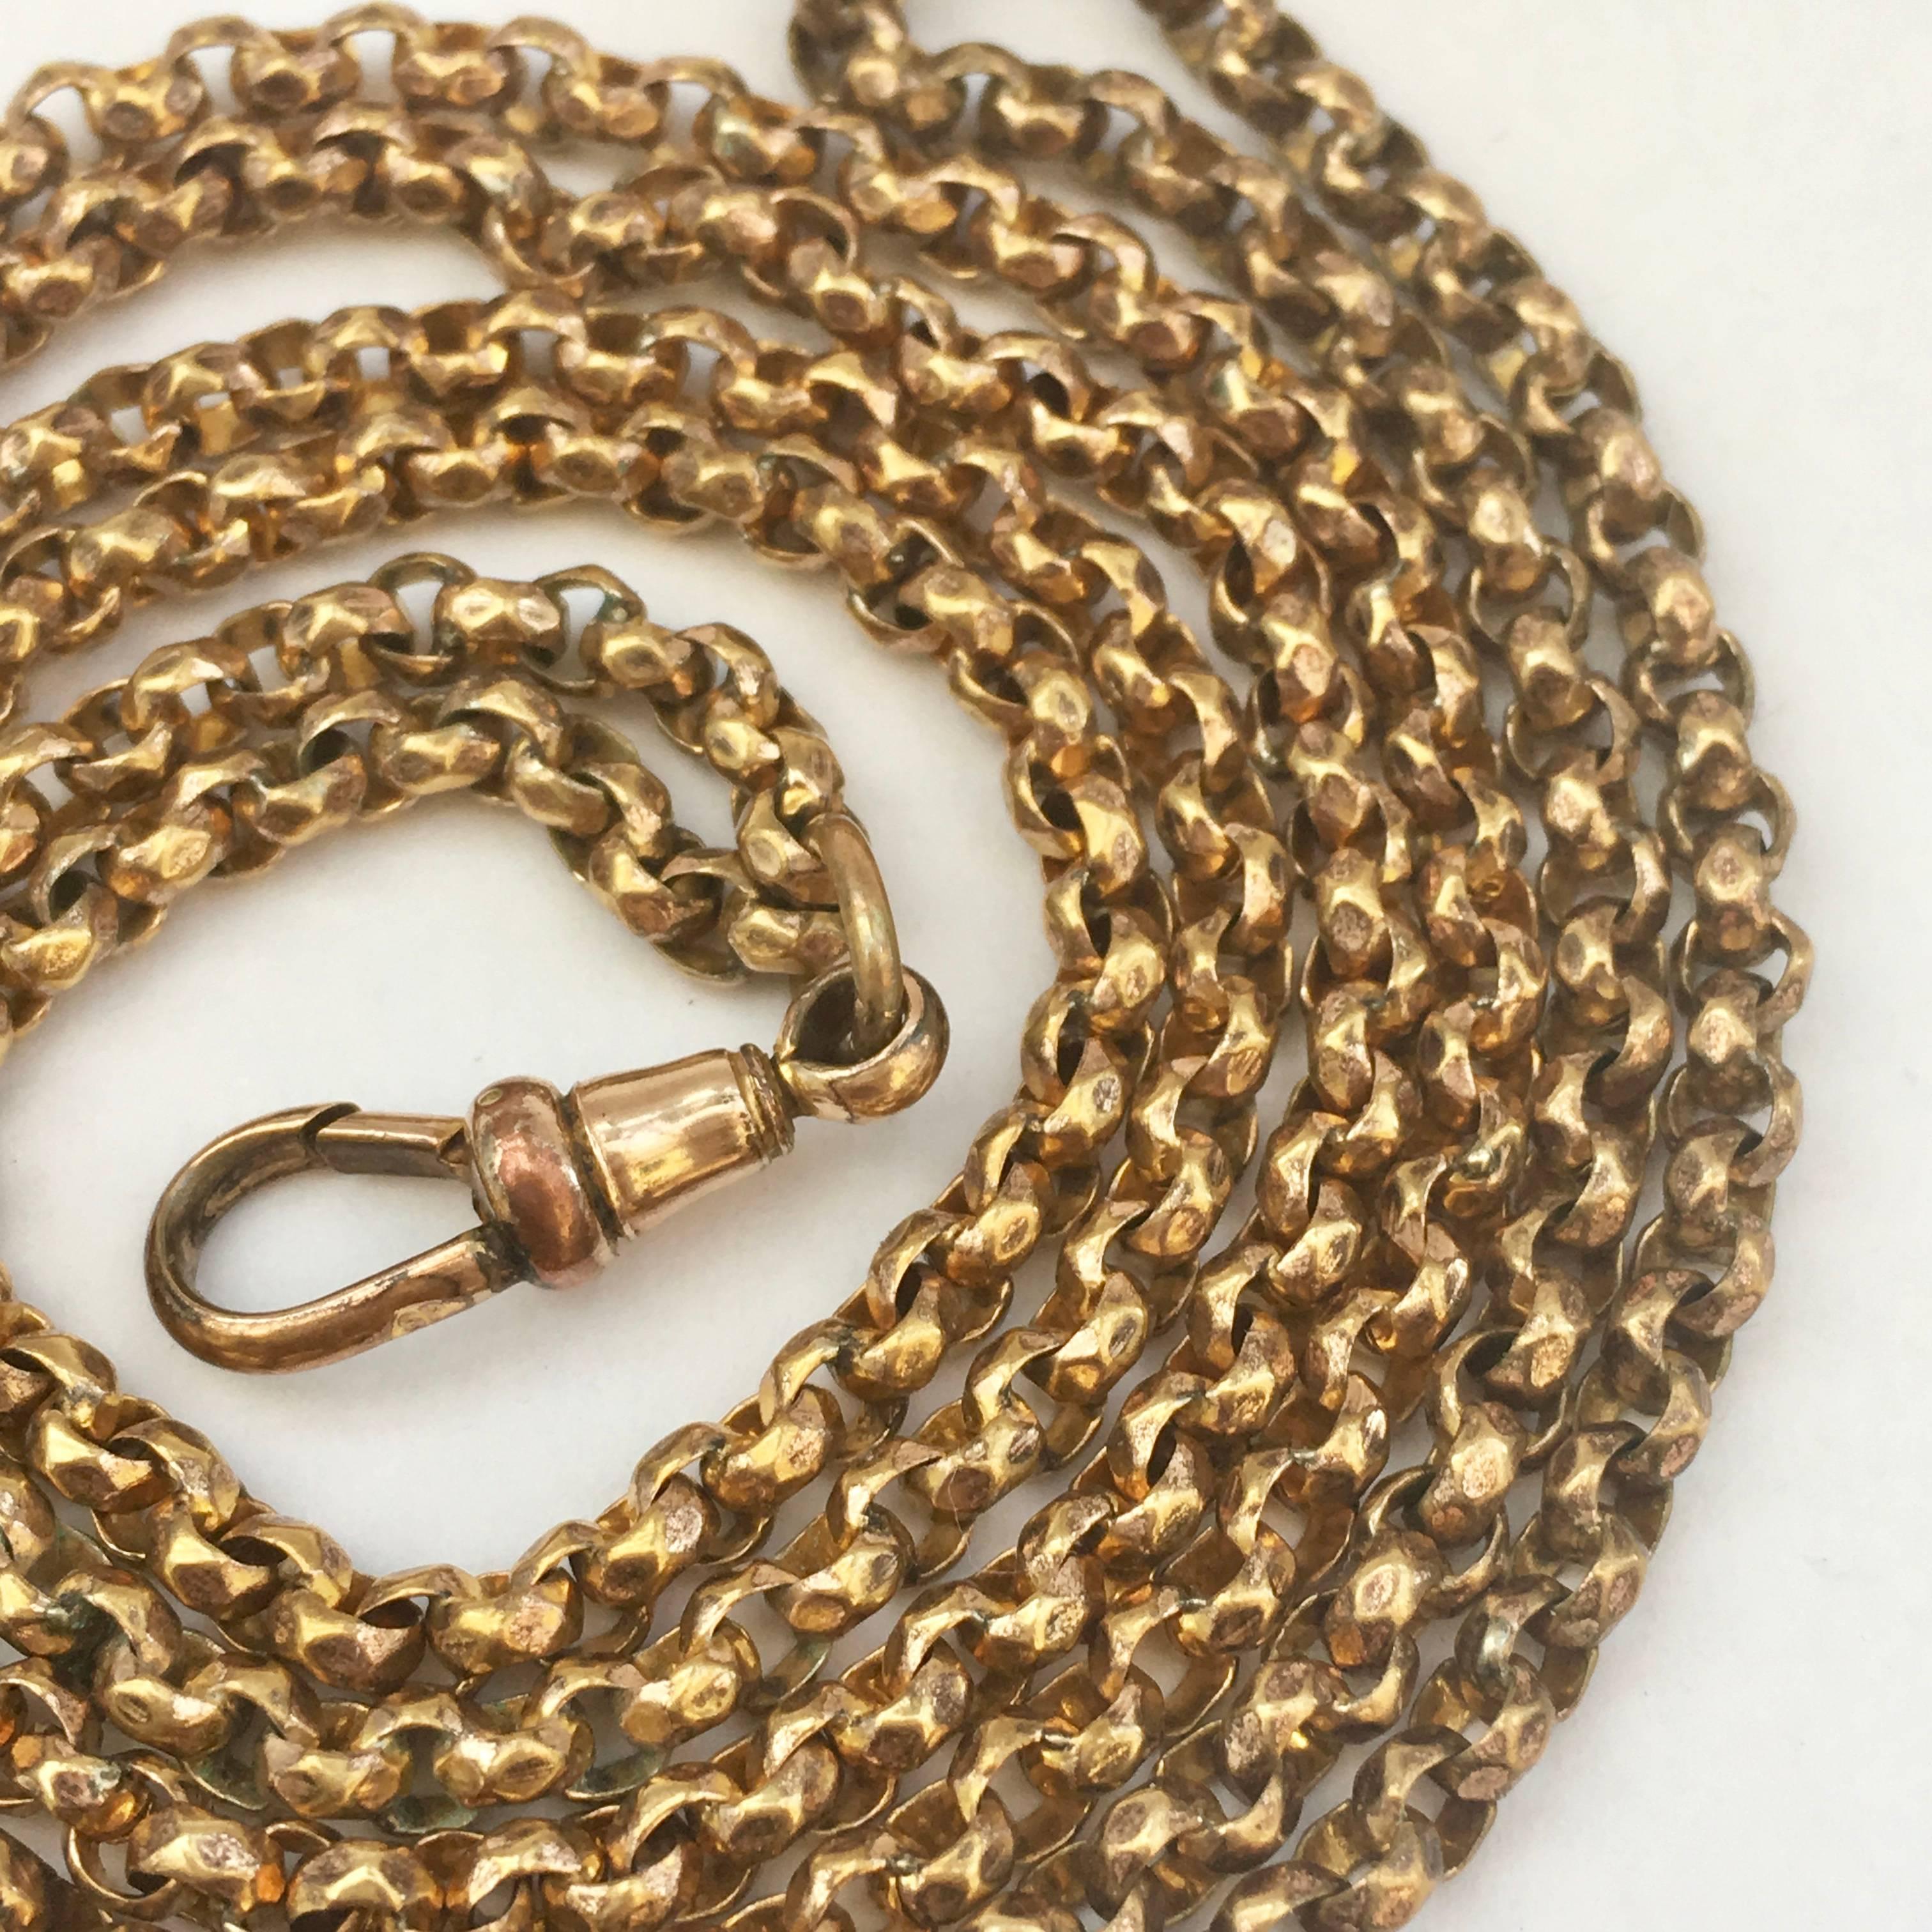 Antique Chains Gilt Brass Necklace Vintage Jewelry Longuard Chain Charm Holder 2